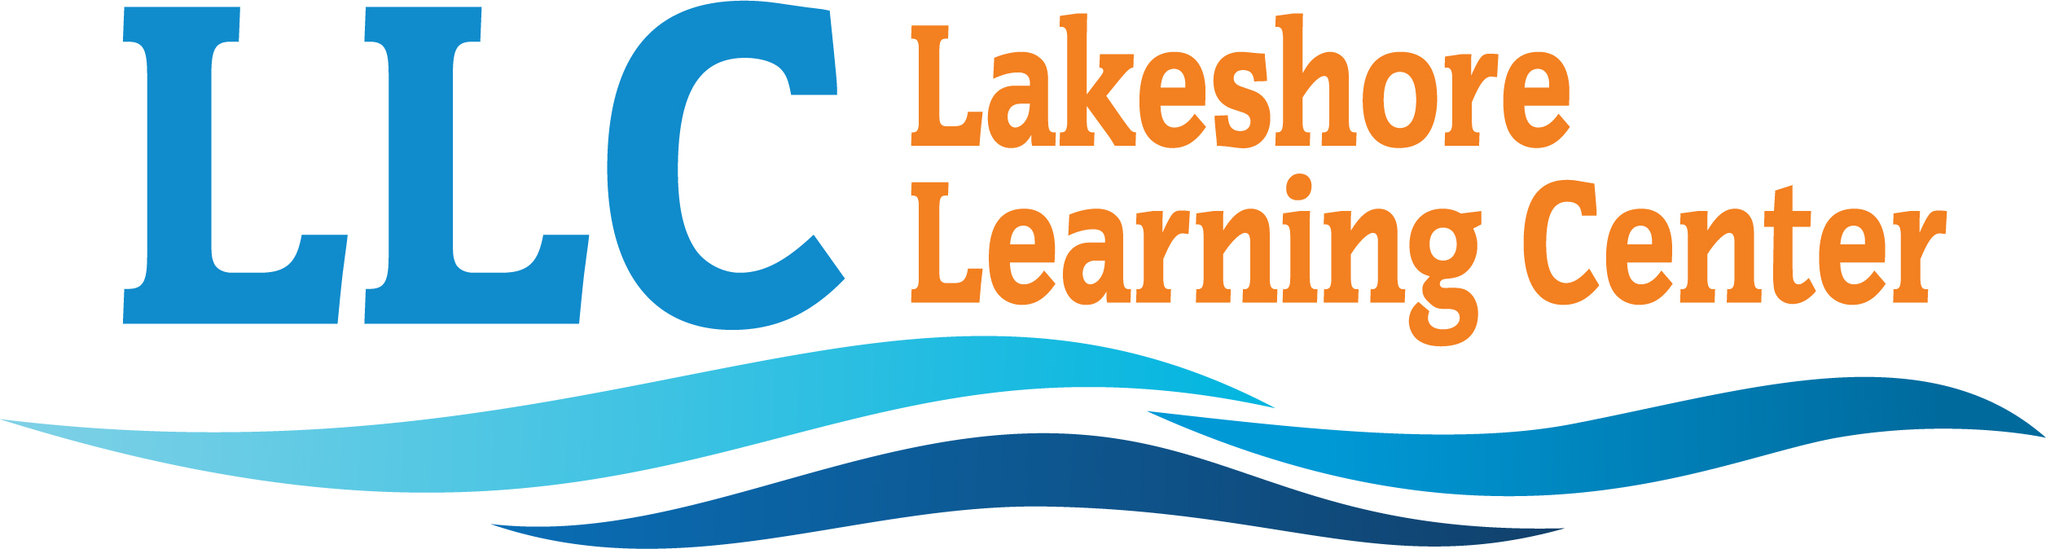 lakeshore learning center